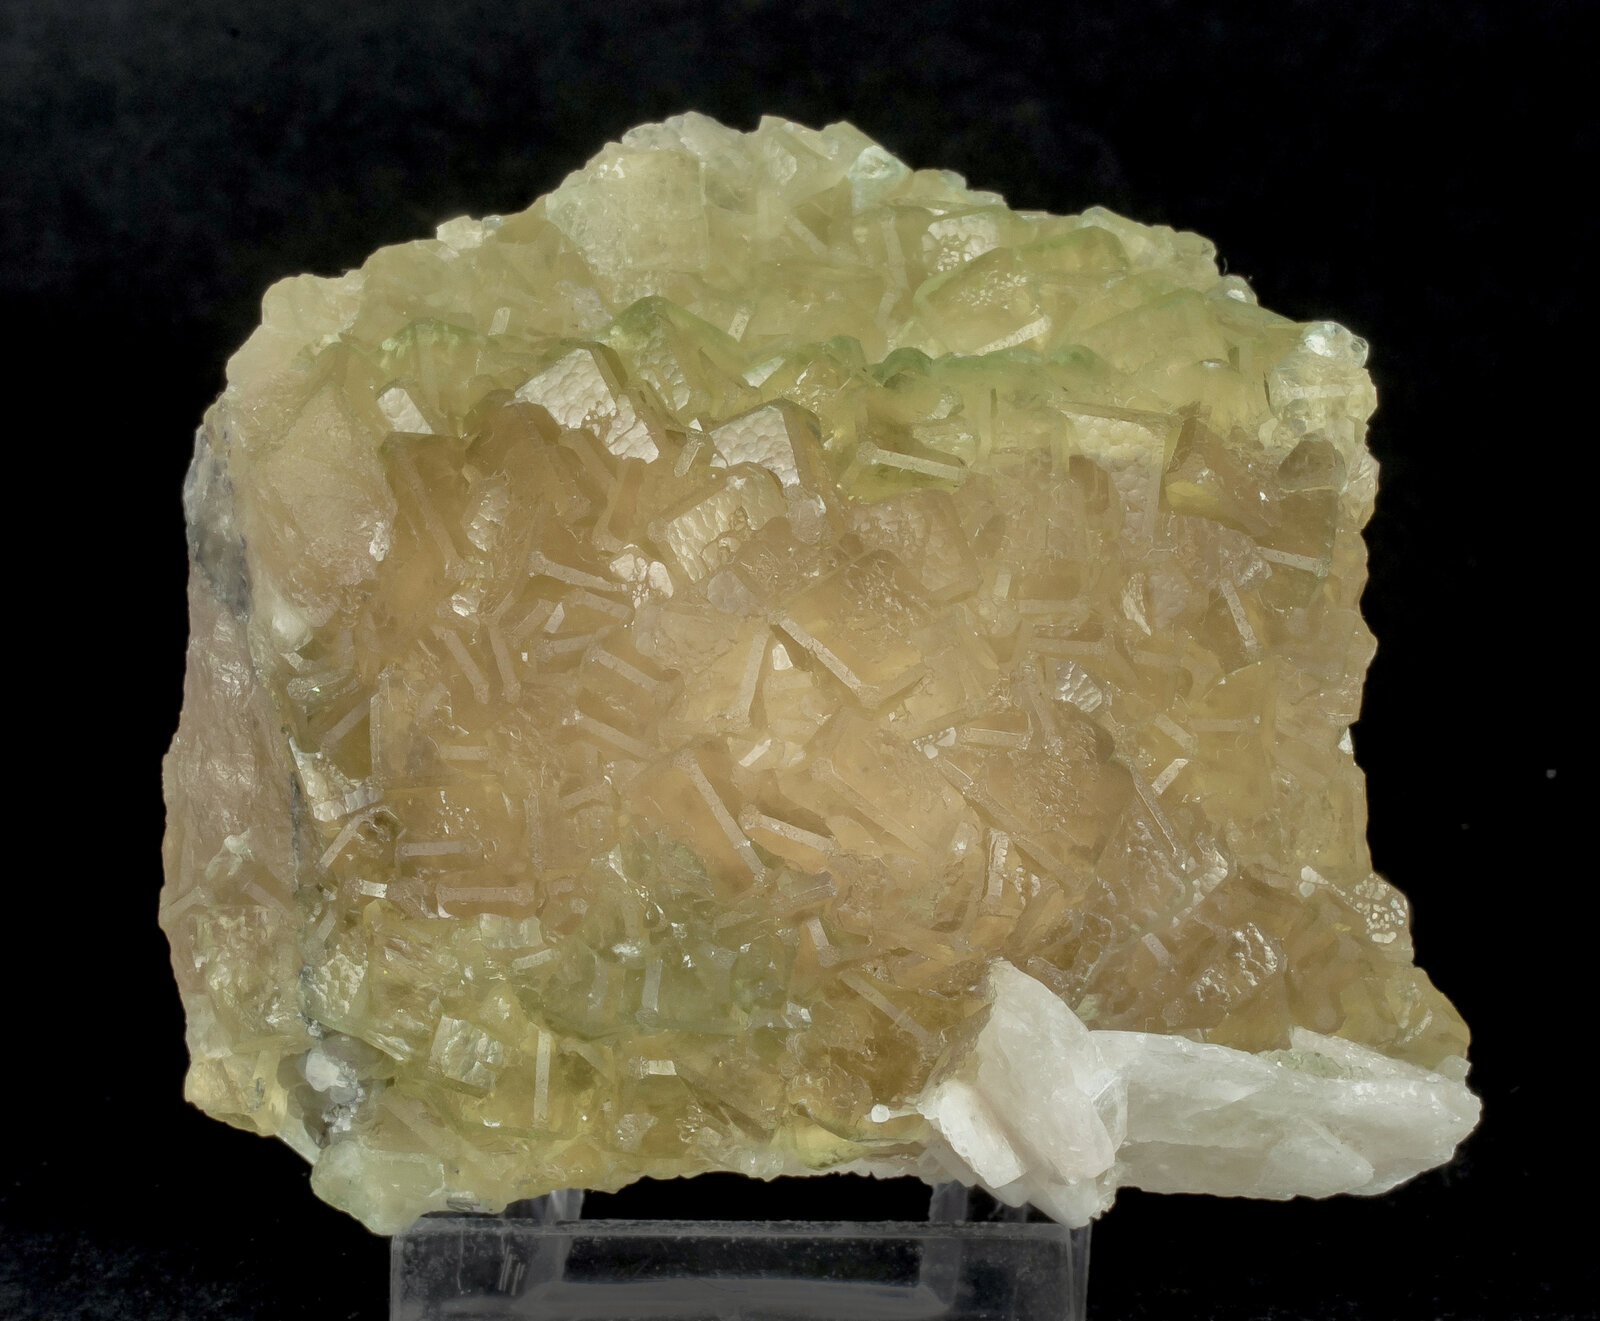 specimens/s_imagesAN5/Fluorite-EFG37AN5f.jpg